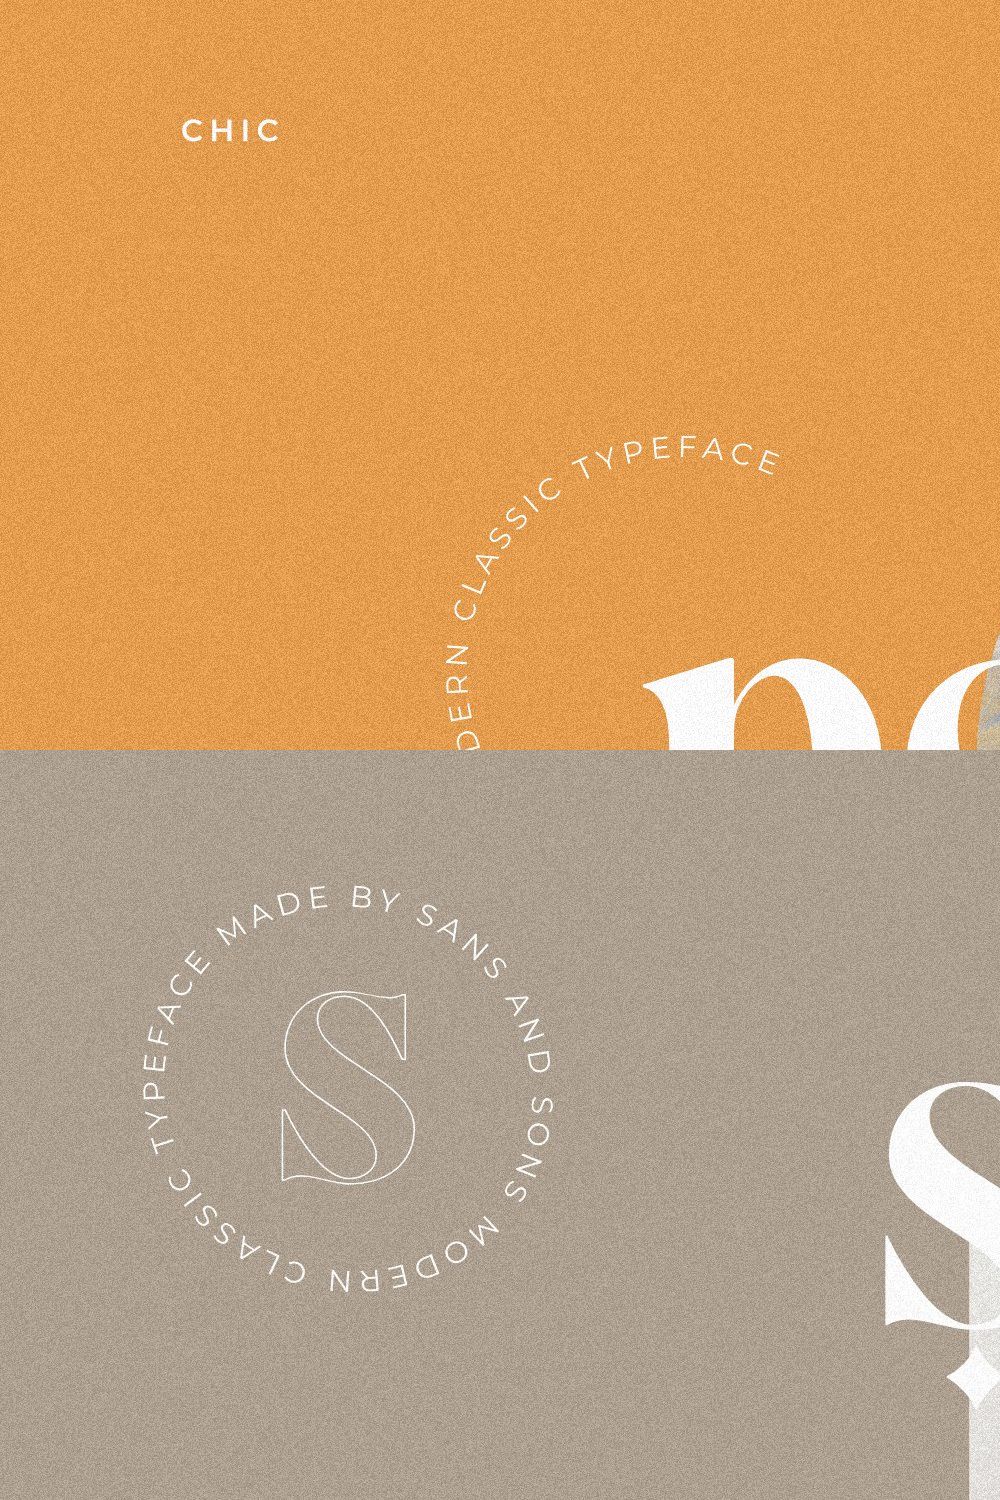 Peach - Modern Chic Serif pinterest preview image.